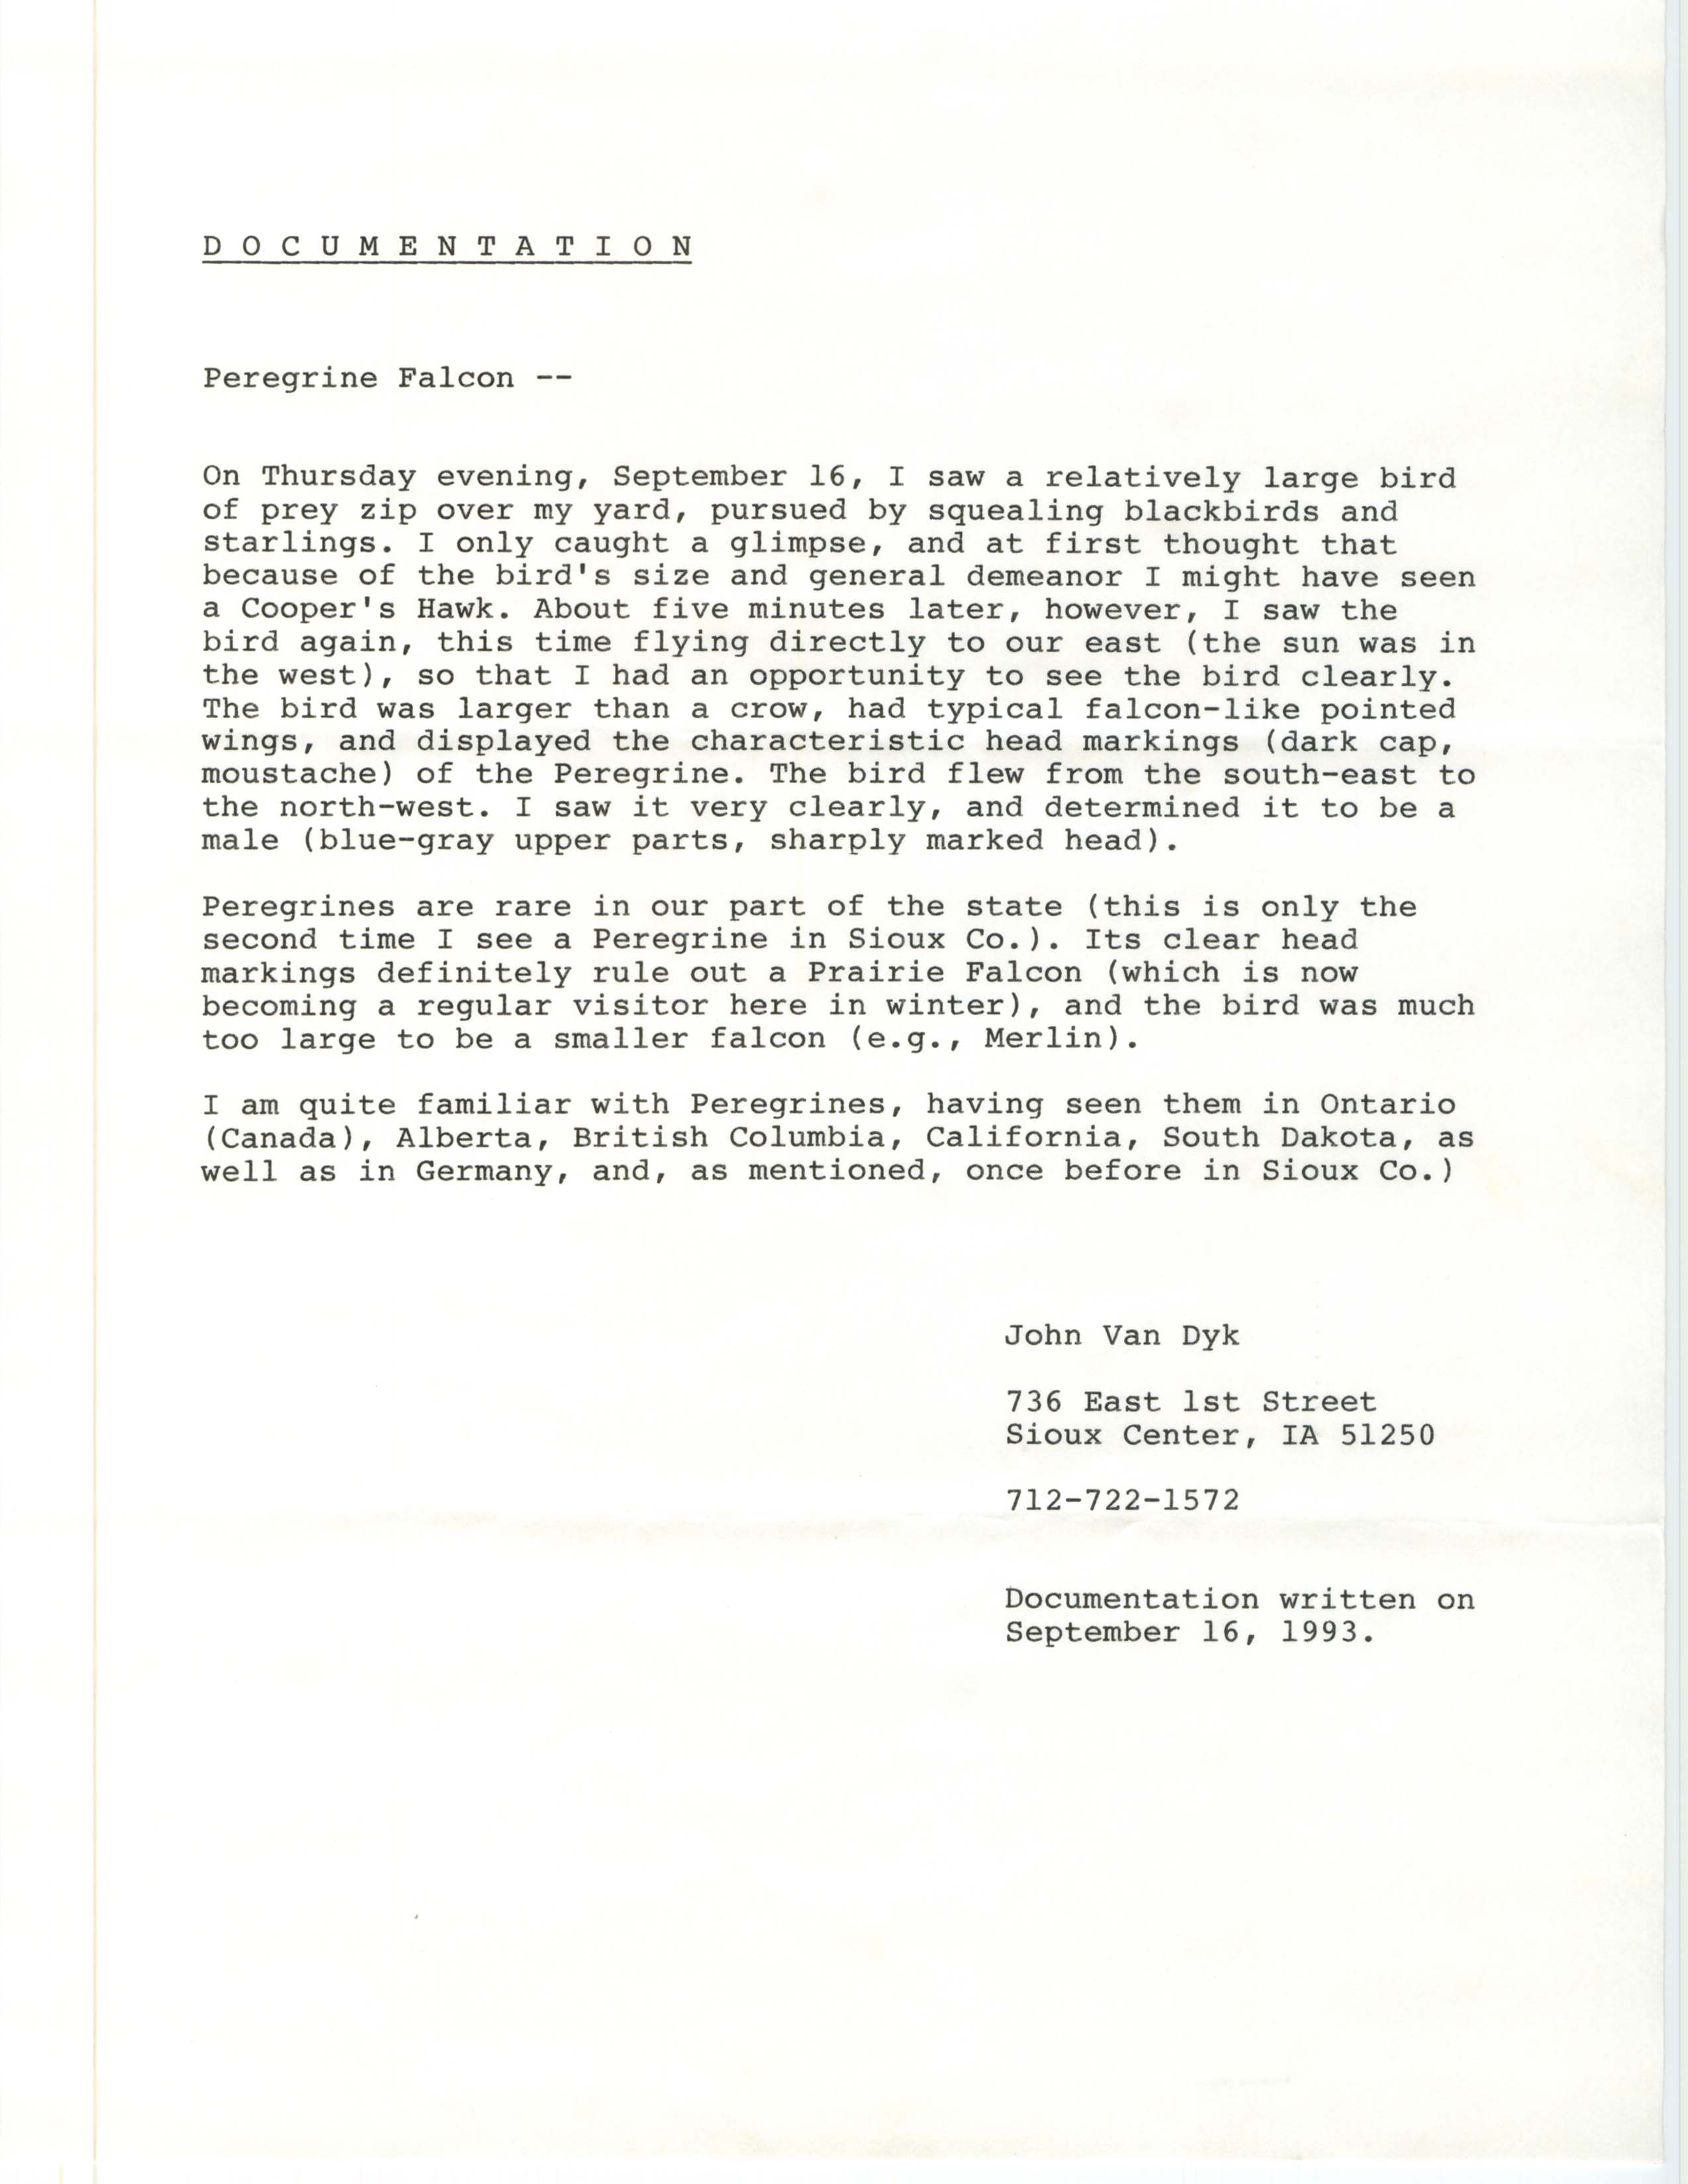 Rare bird documentation form for Peregrine Falcon at Sioux Center, 1993